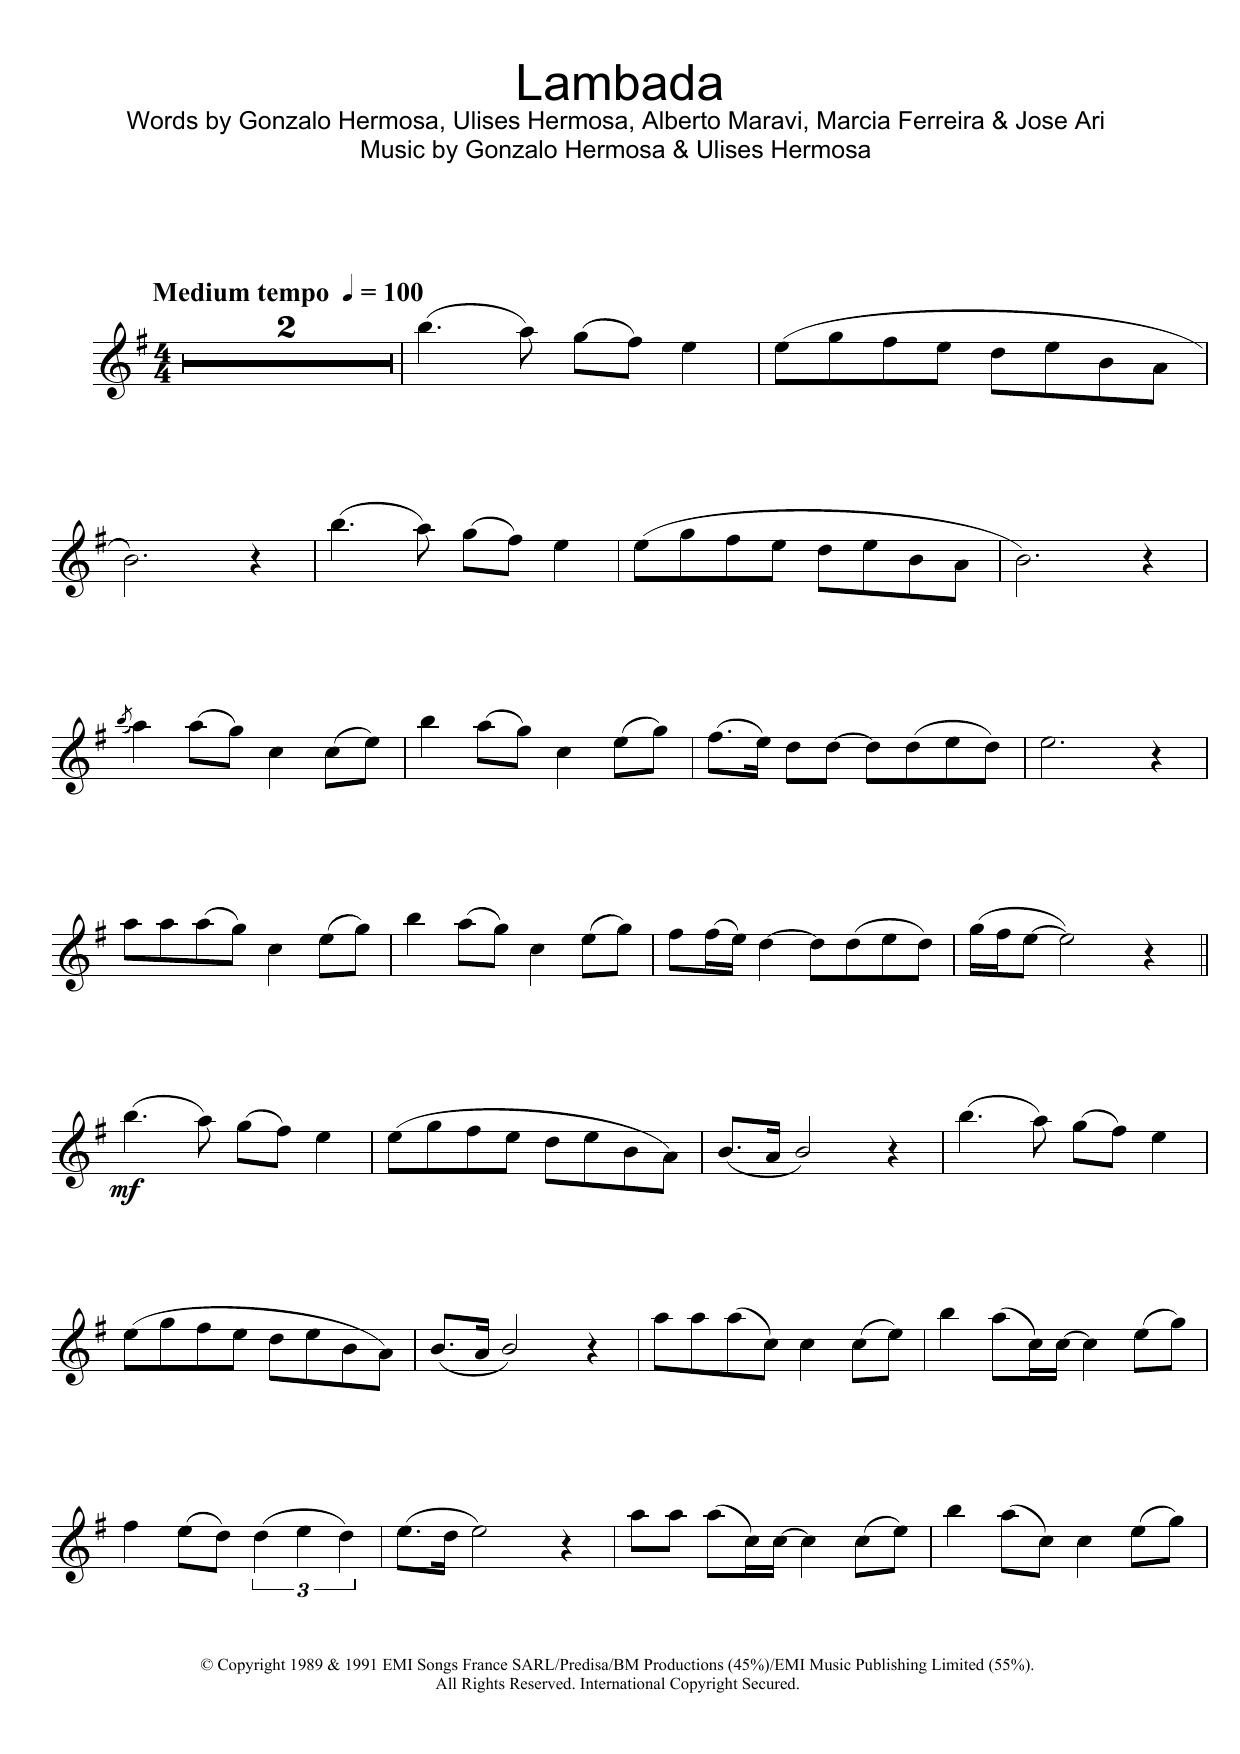 Kaoma Lambada Sheet Music Notes & Chords for Keyboard - Download or Print PDF